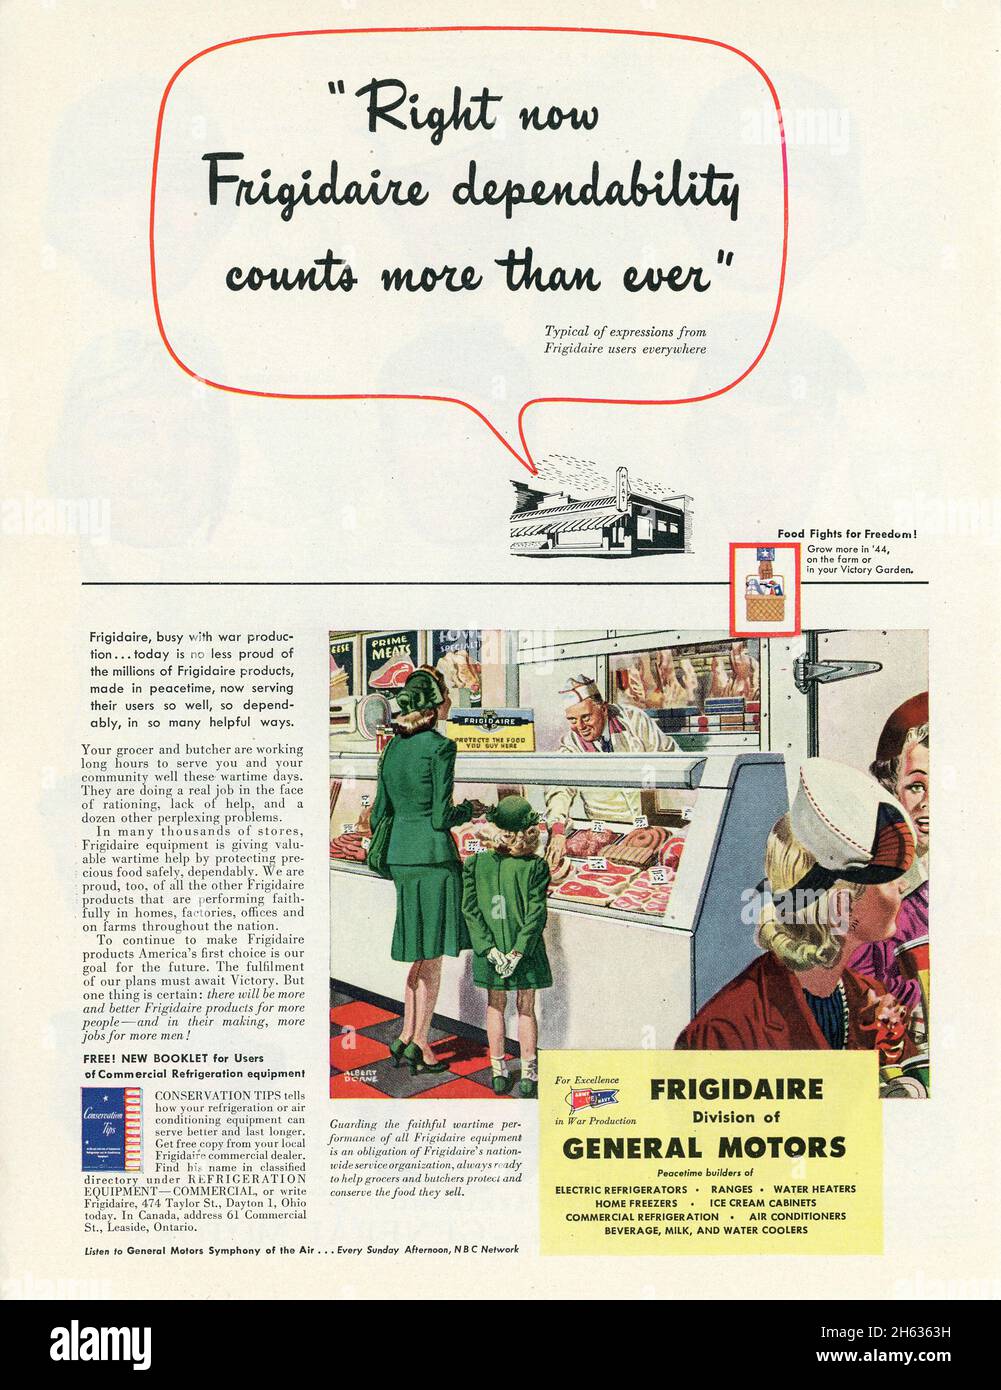 29 May 1944 'Time' newsmagazine issue advertisement, USA Stock Photo